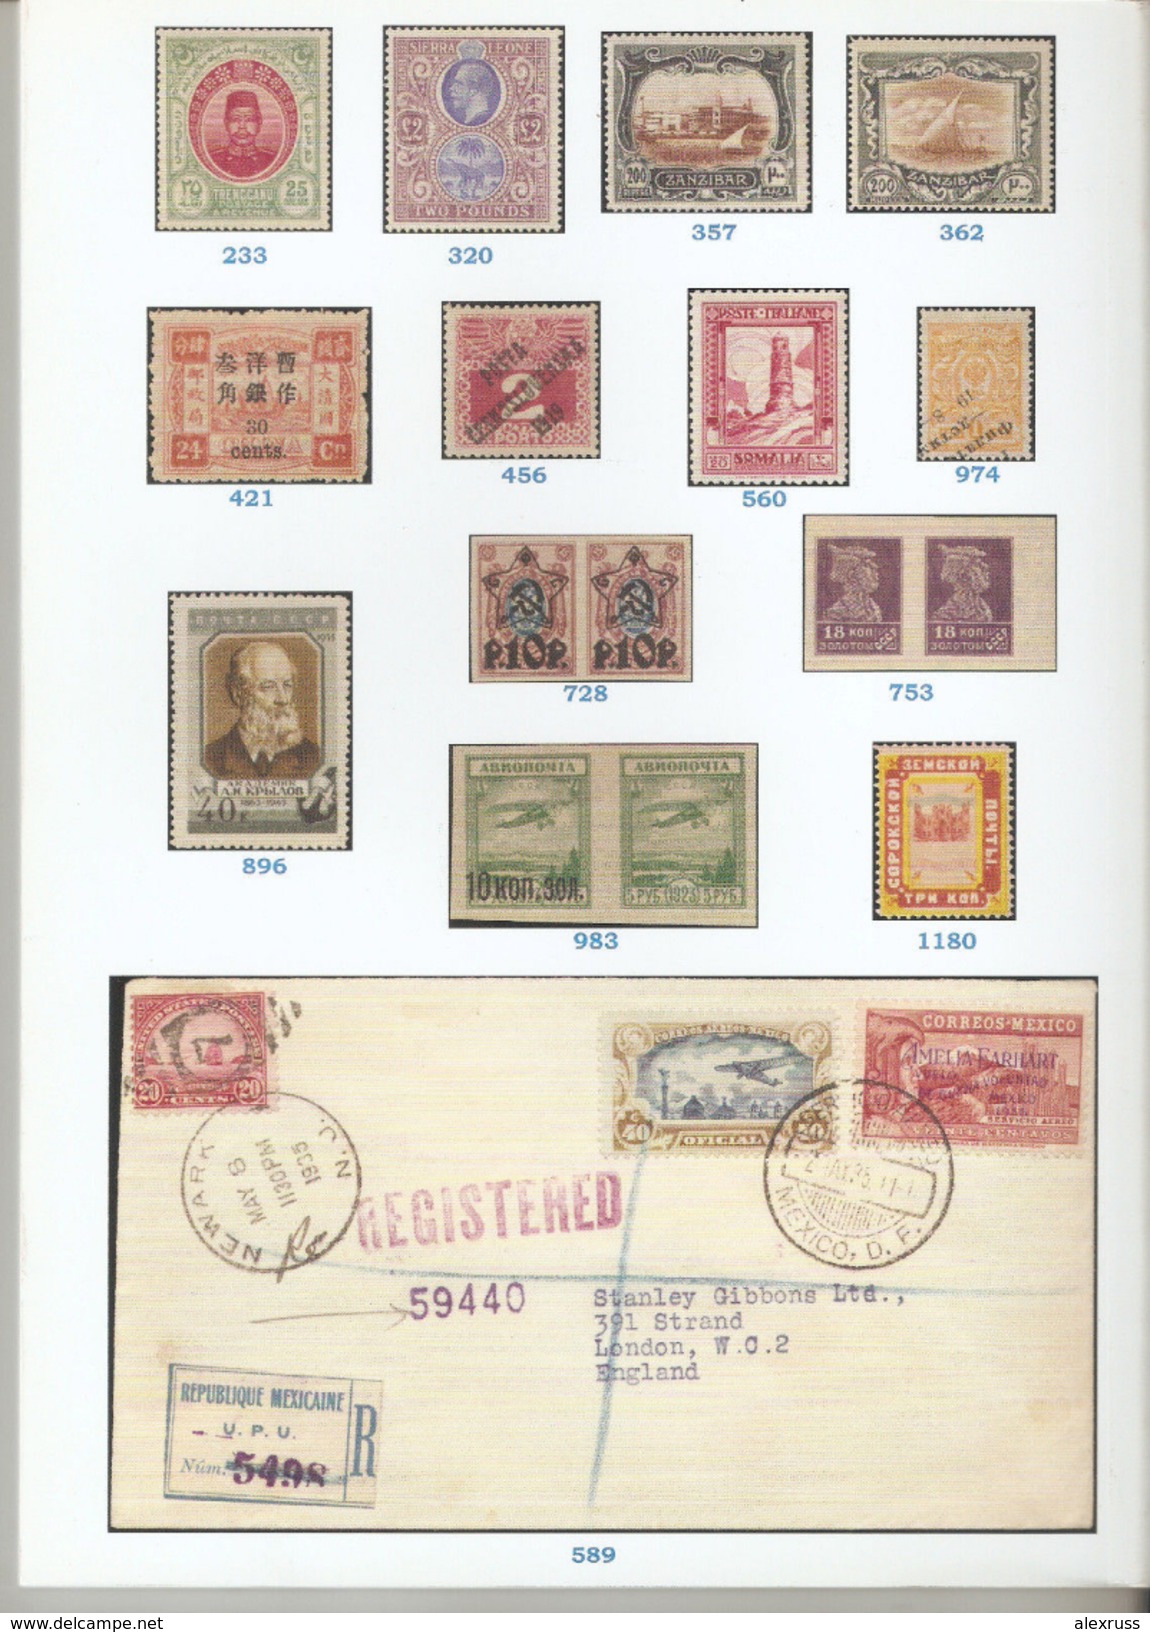 Raritan Stamps Auction 64,Mar 2015 Catalog Of Rare Russia Stamps,Errors & Worldwide Rarities - Catálogos De Casas De Ventas